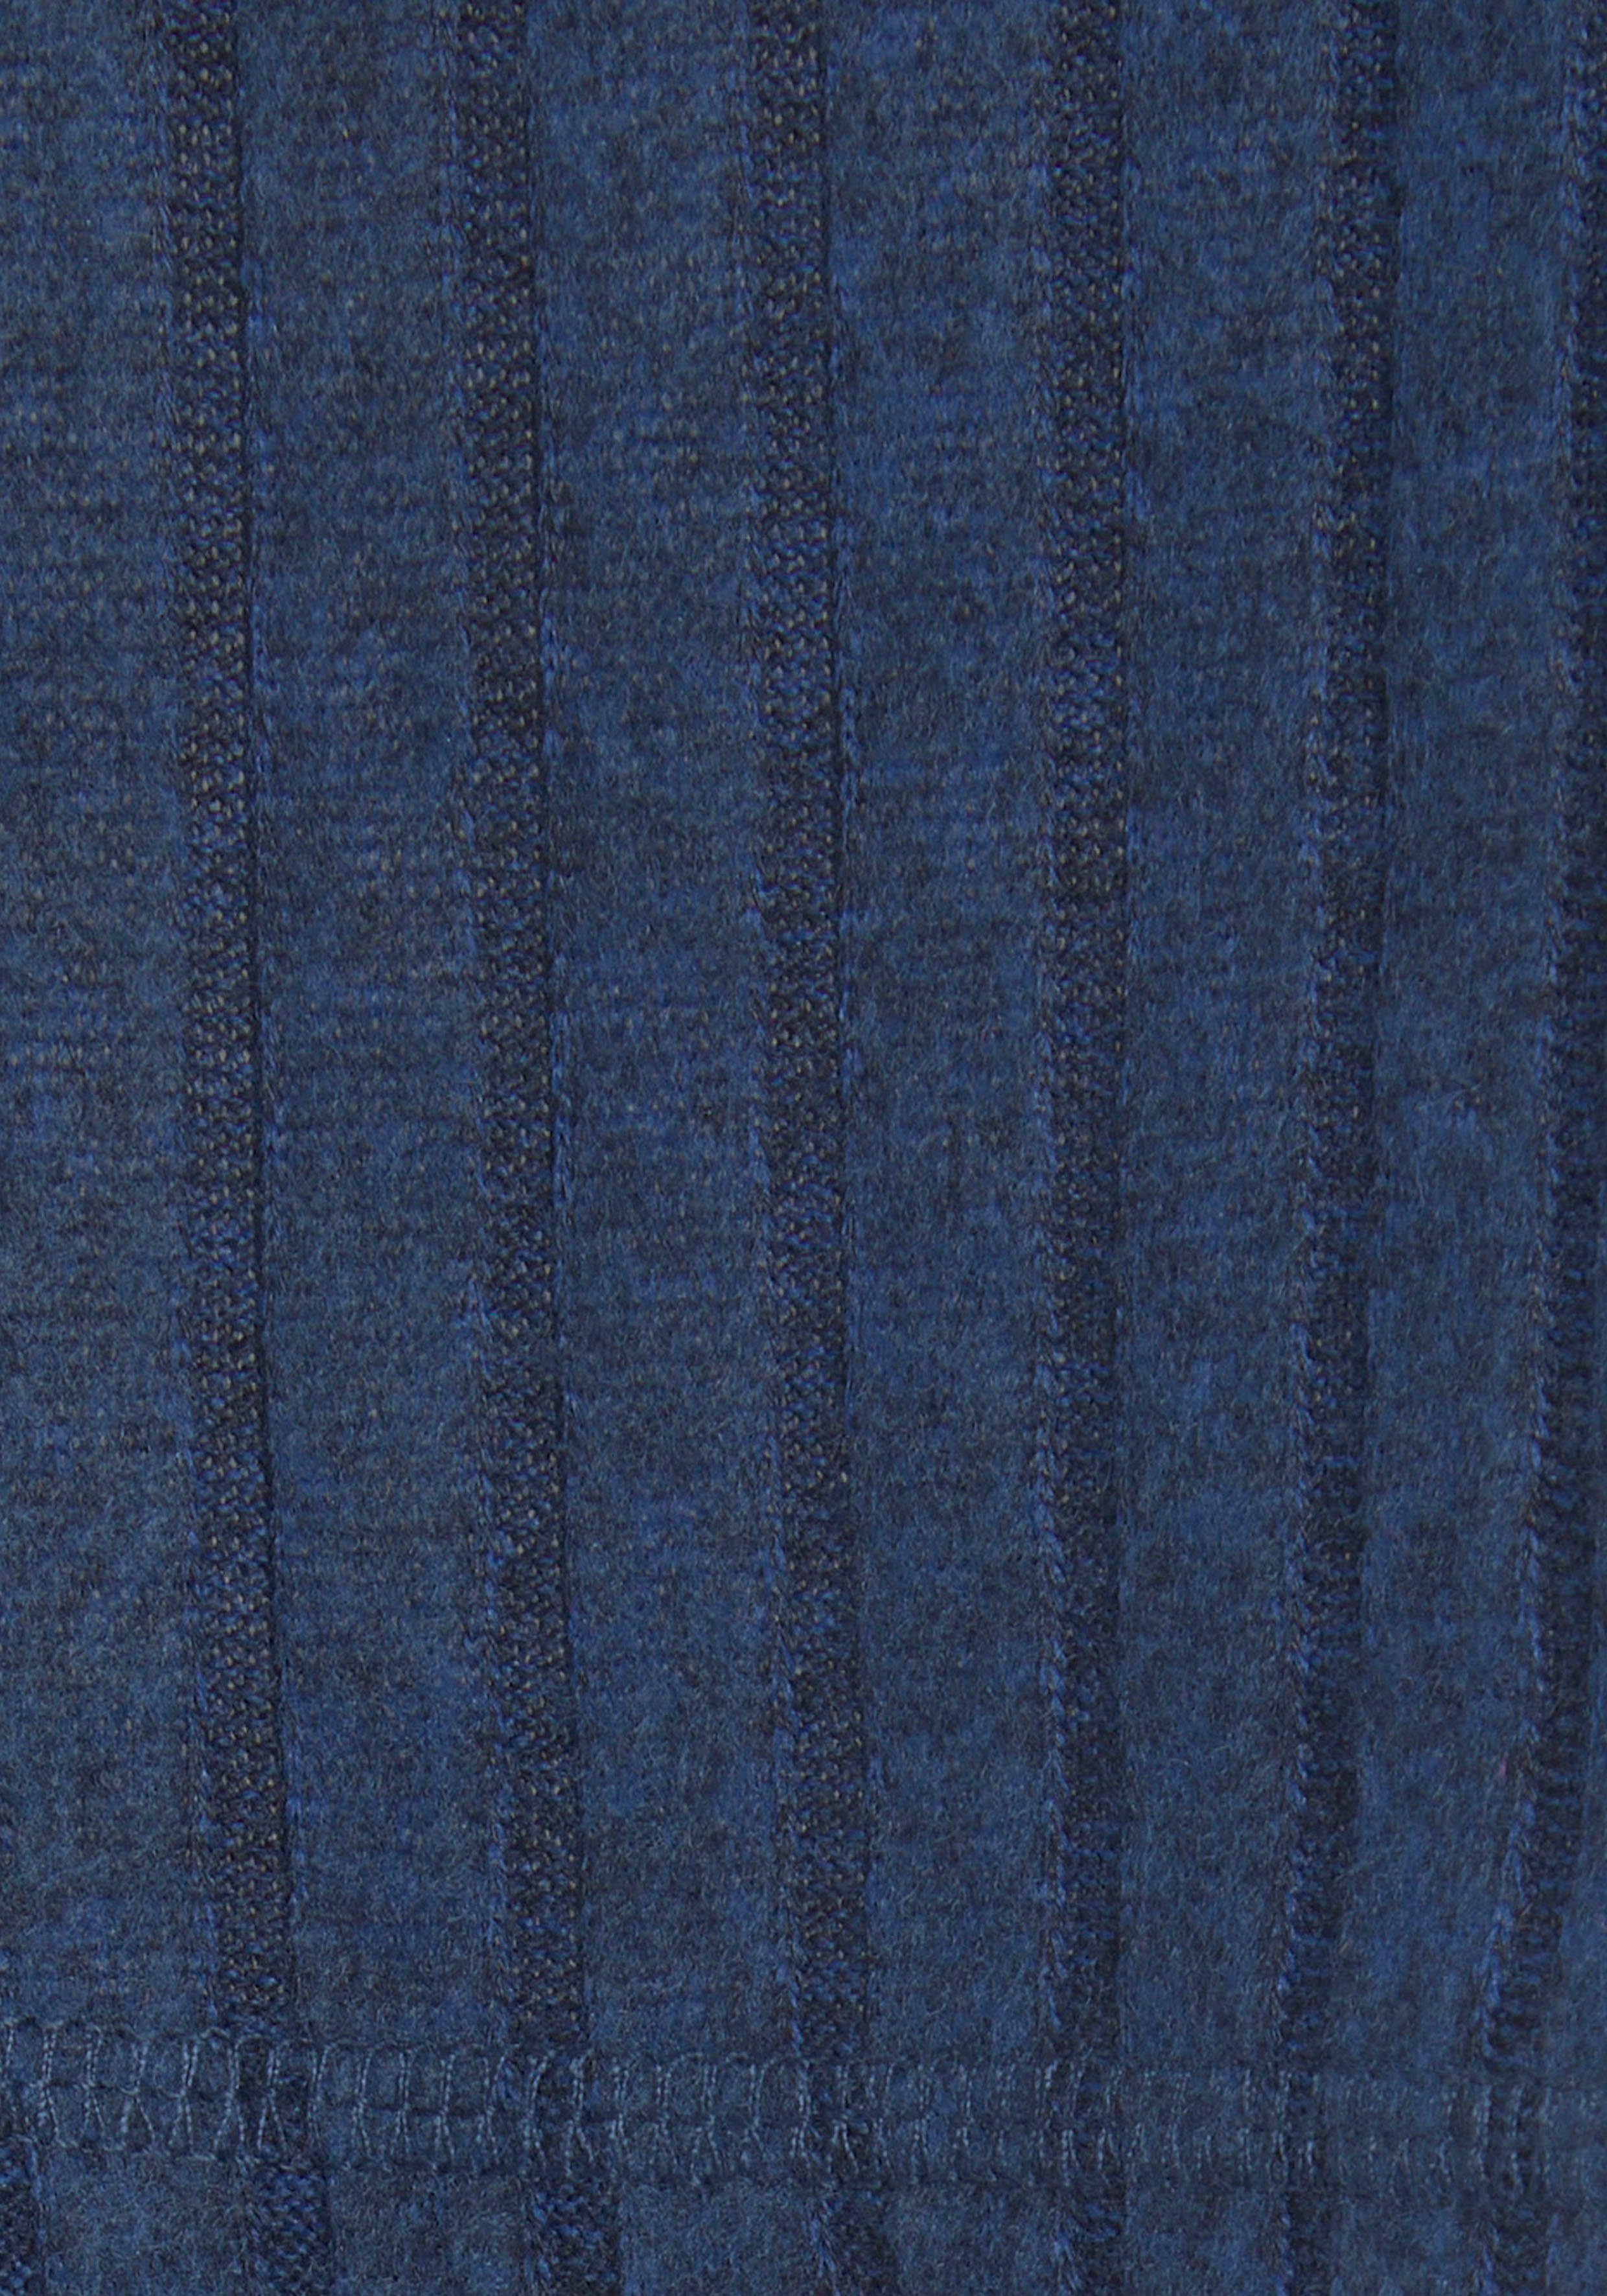 LASCANA -Loungeshirt Strick, blau-melange aus Loungewear weichem 3/4-Arm-Shirt